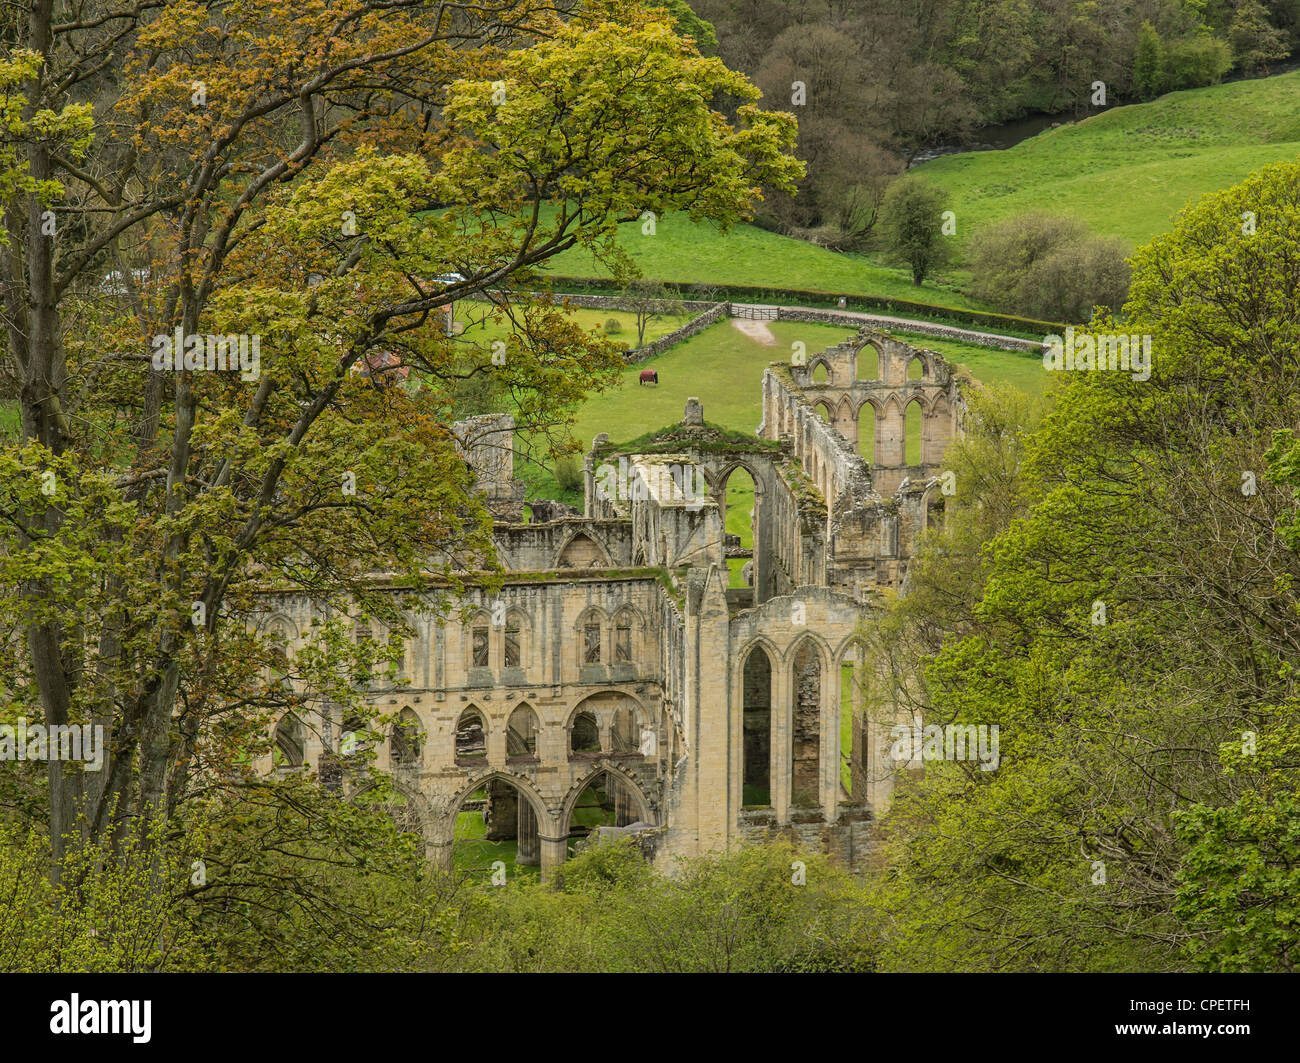 Rievaulx Abbey, Yorkshire, England - mediaeval monastic abbey famous for its setting. Stock Photo